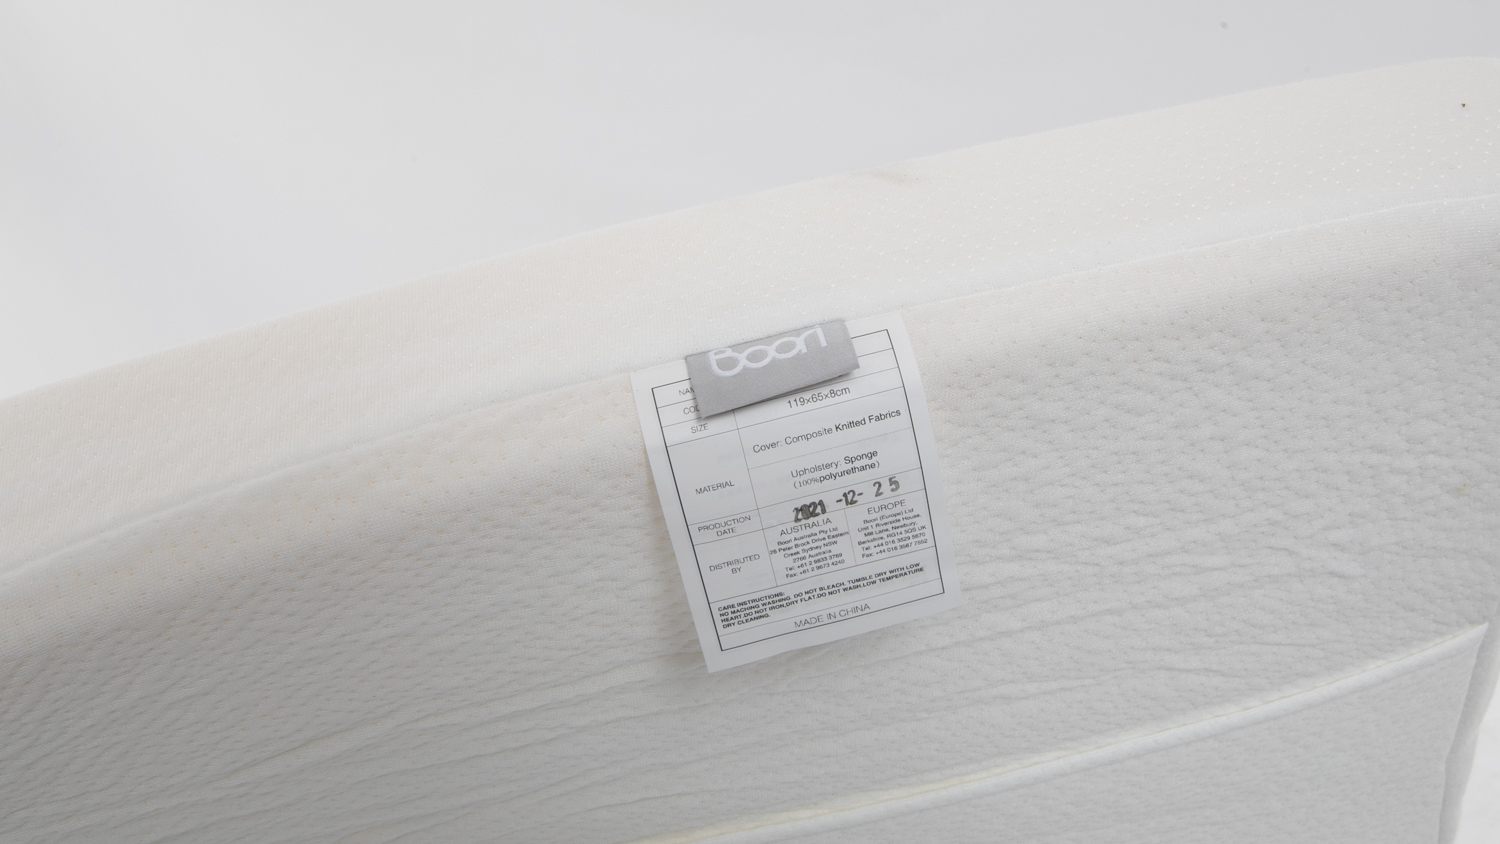 boori airflow reversa mesh mattress review